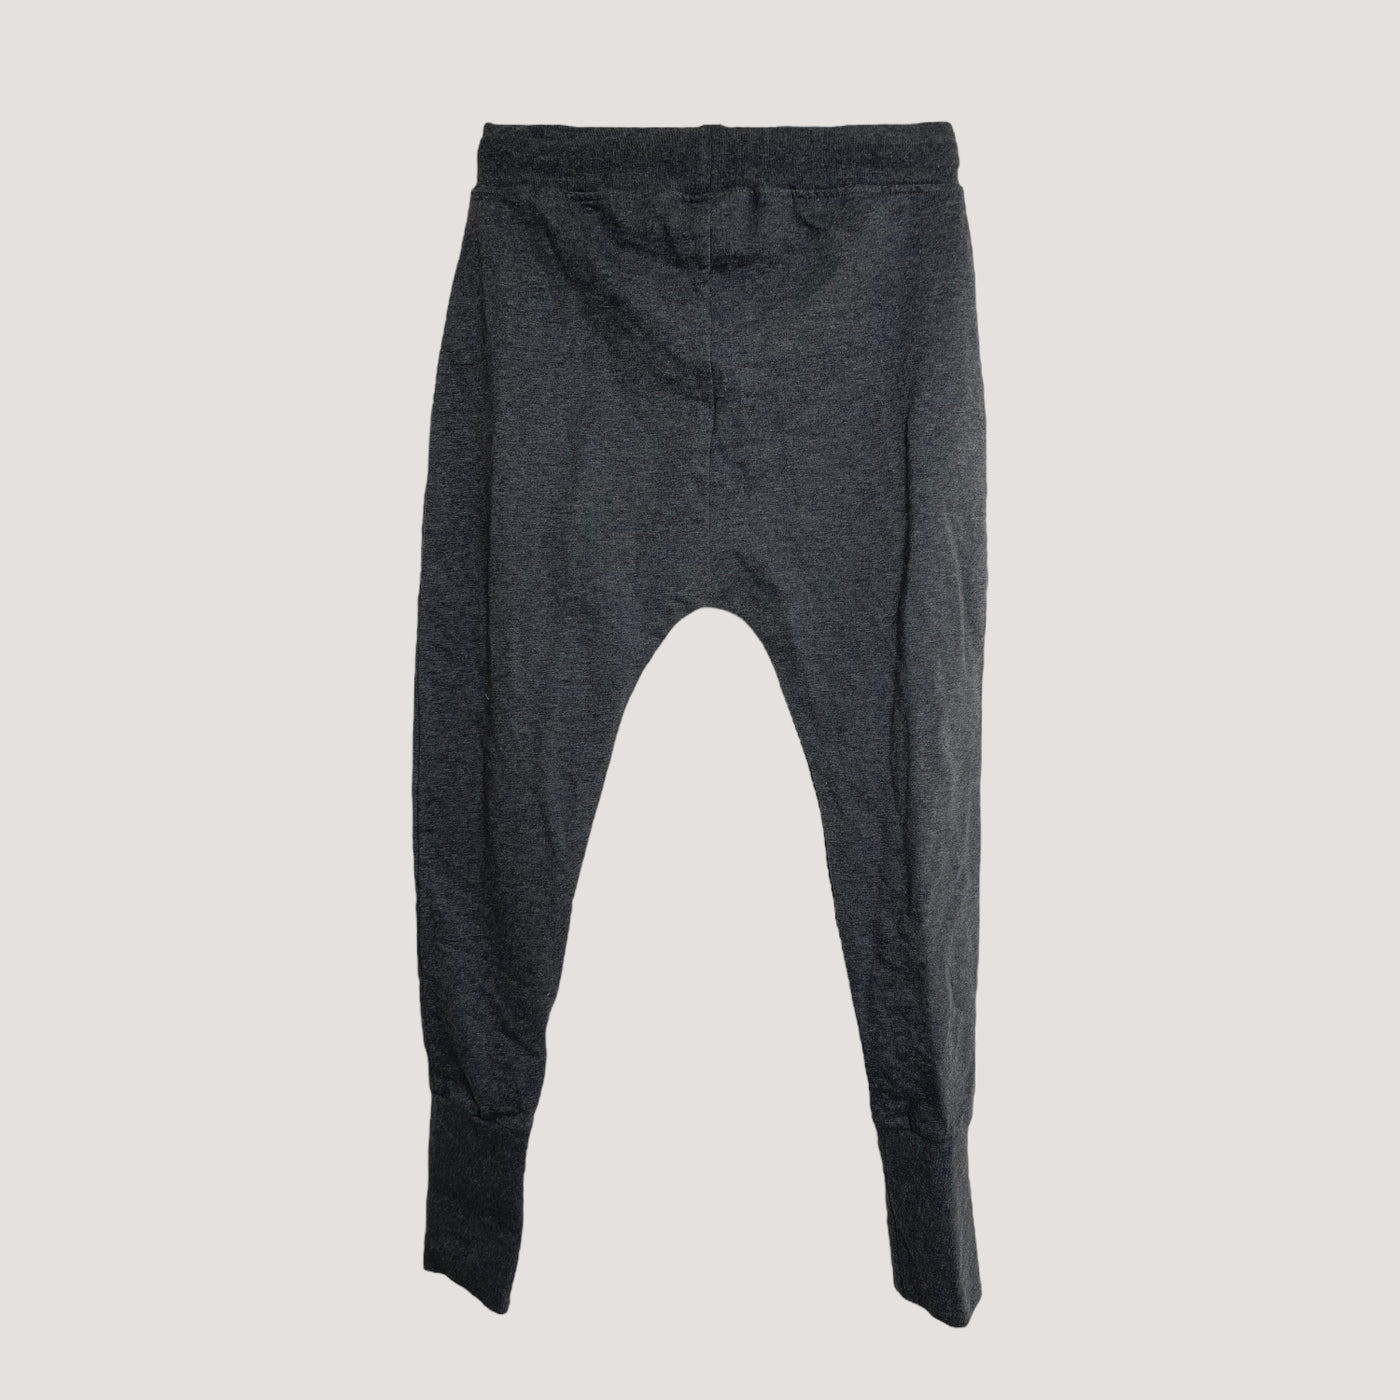 Papu patch baggy pants, dark grey/black | 134/140cm